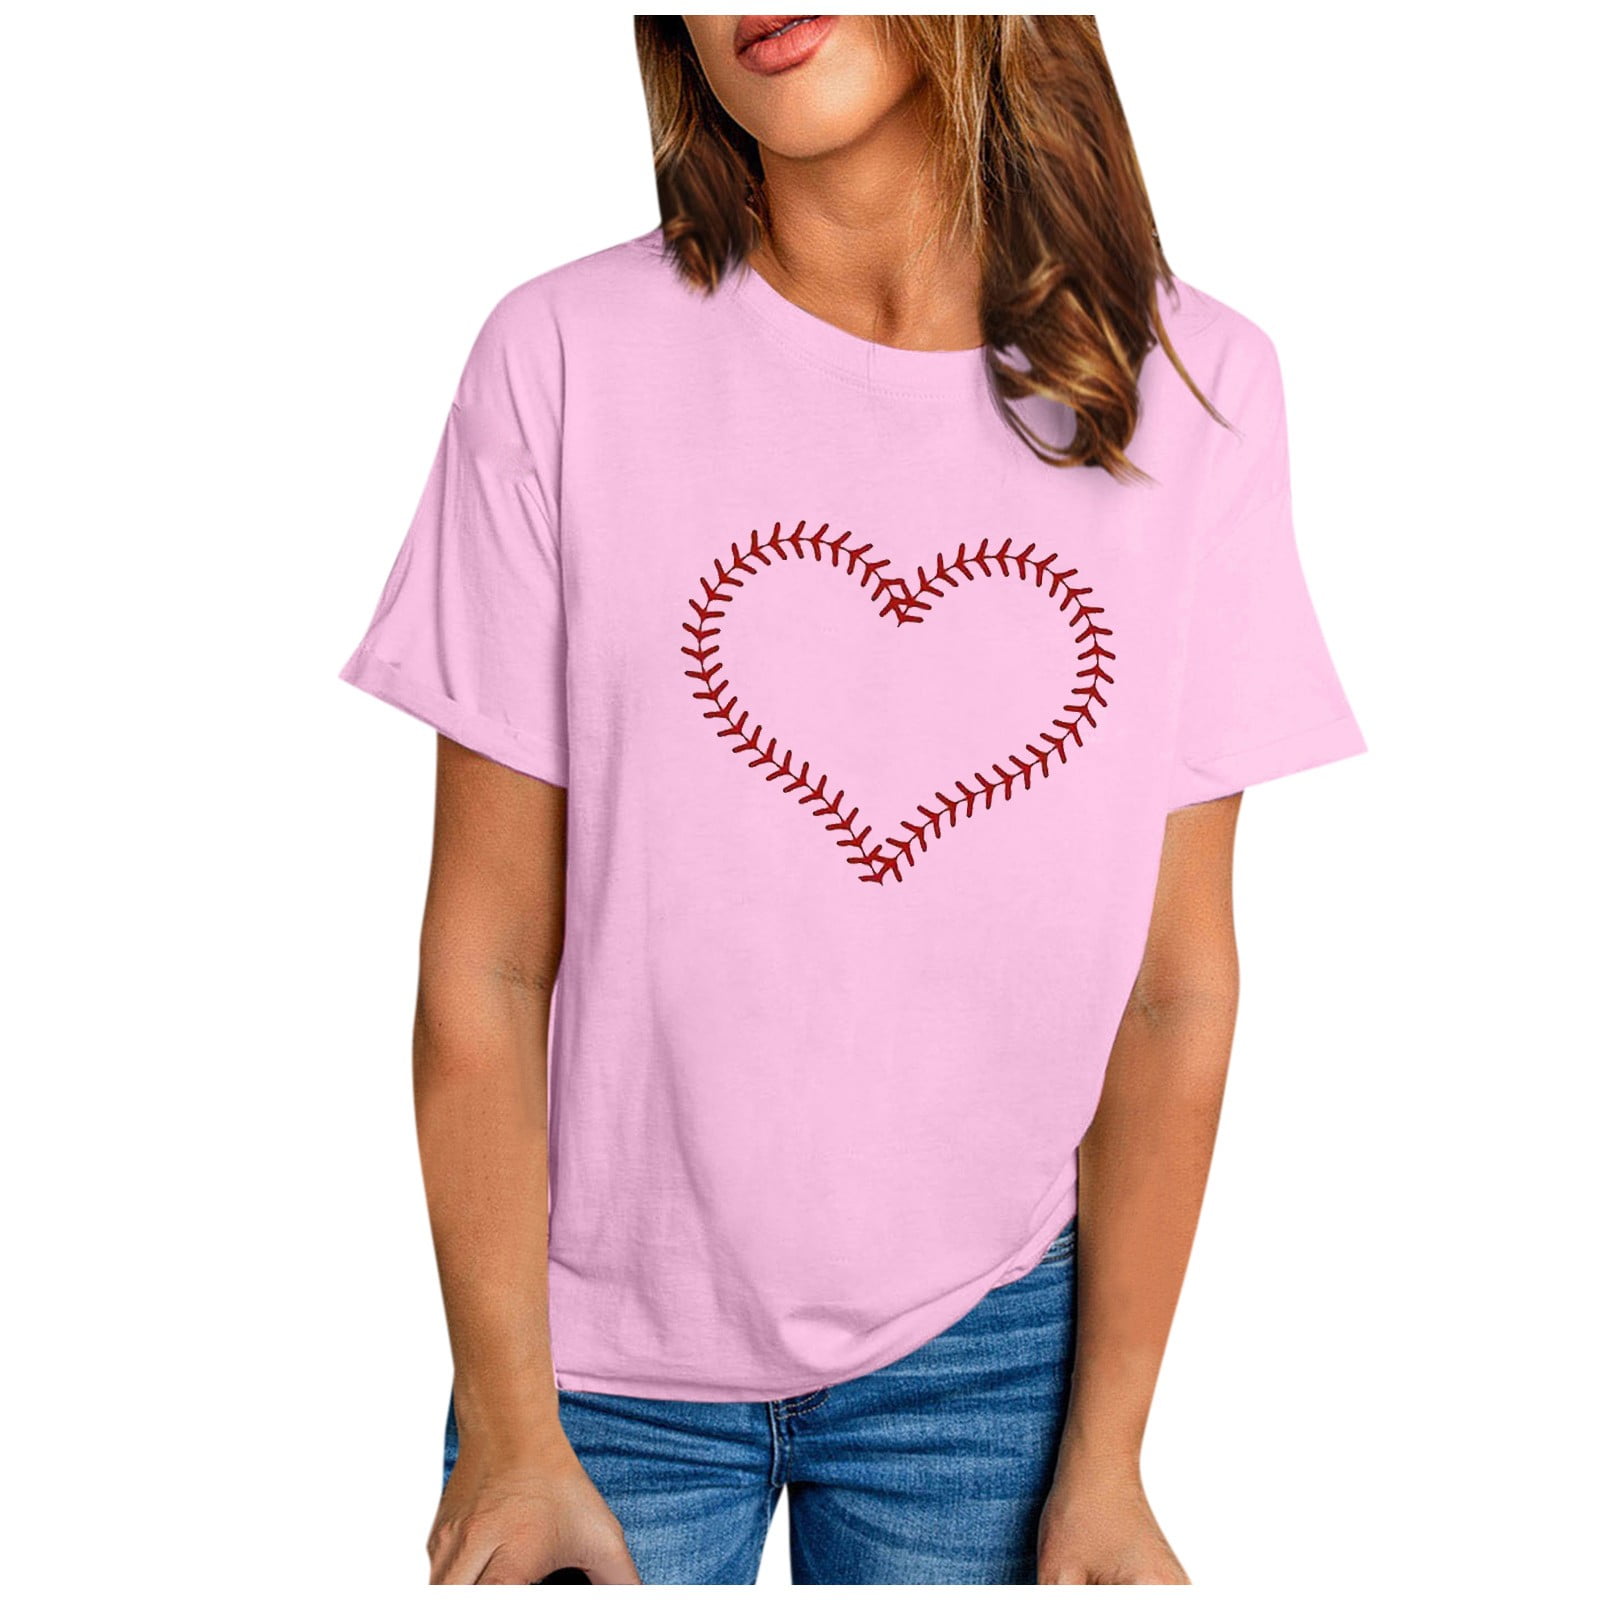 Shirts for Women Short Sleeve Play Ball Shirt for Womens Baseball Tshirts Graphic Tees Casual Letter Softball Tee Shirts Top,Pink XXXL - Walmart.com